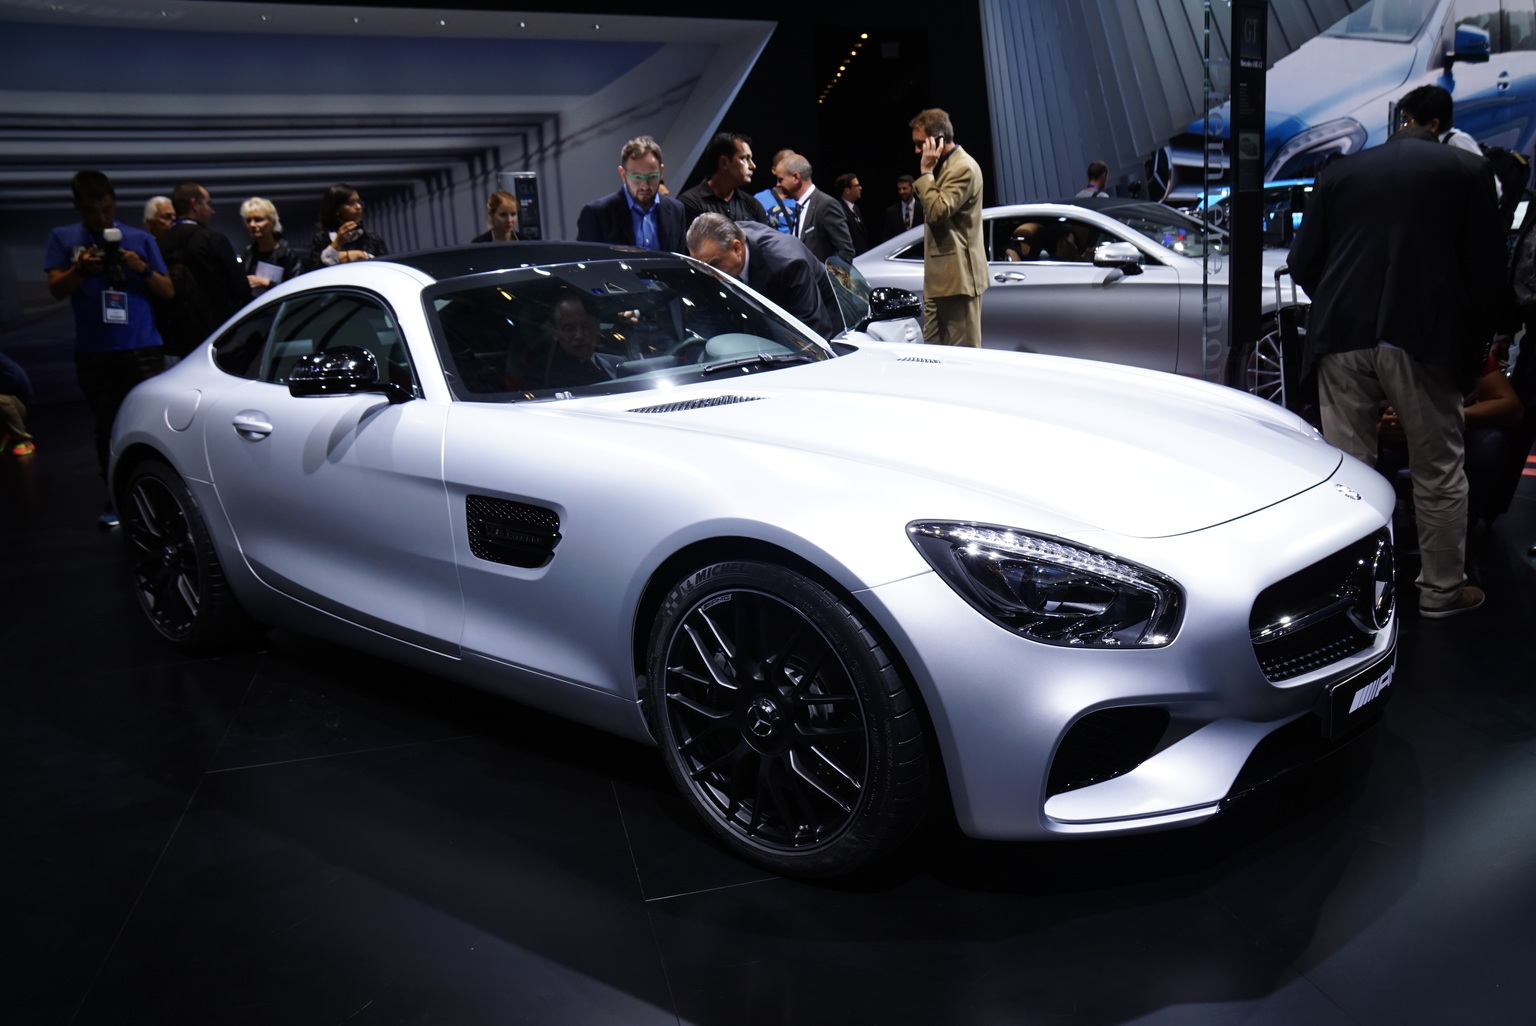 2015 Mercedes-AMG GT Gallery